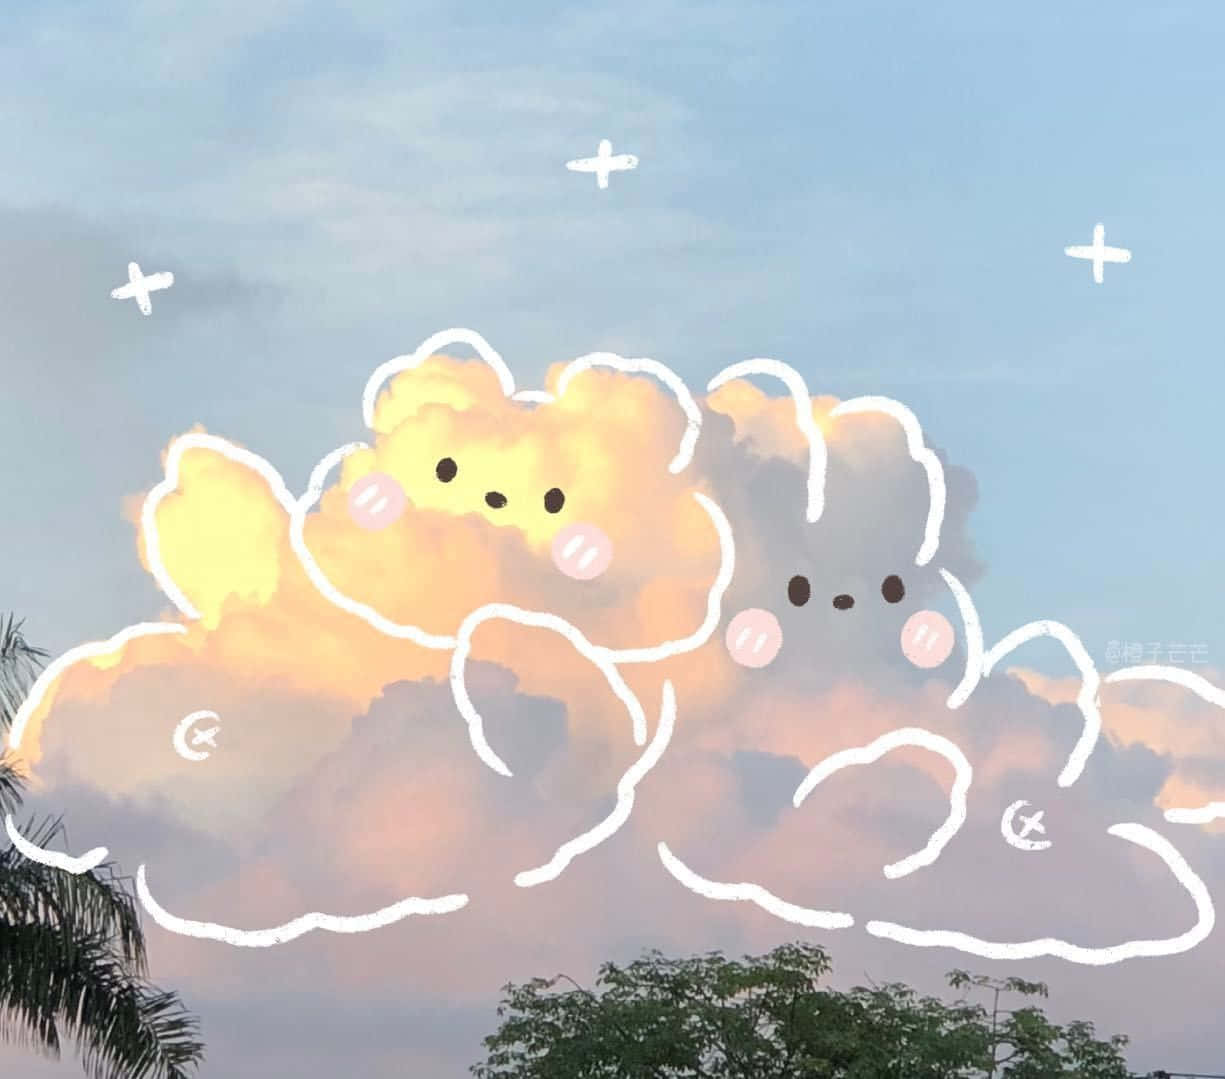 Free Cute Cloud Wallpaper Downloads, Cute Cloud Wallpaper for FREE